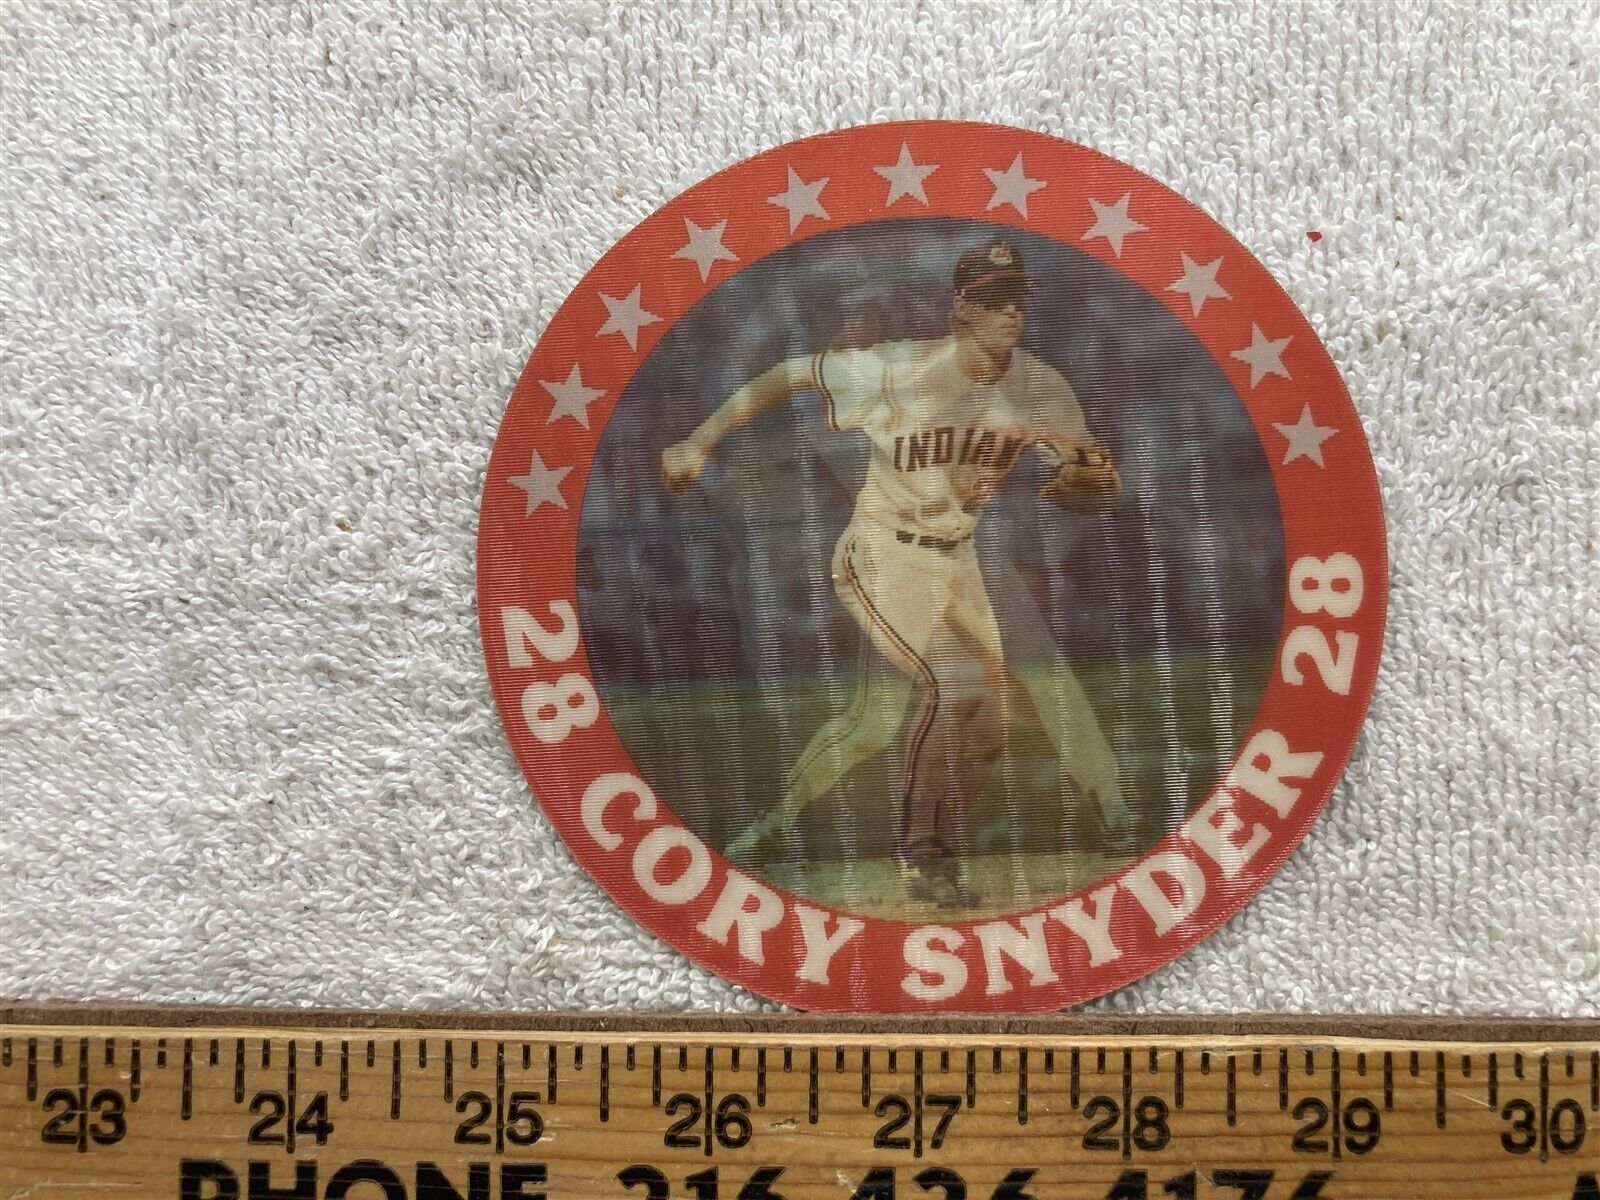 1987 Sportflics Superstar Discs #28 Cory Snyder (4 1/2\